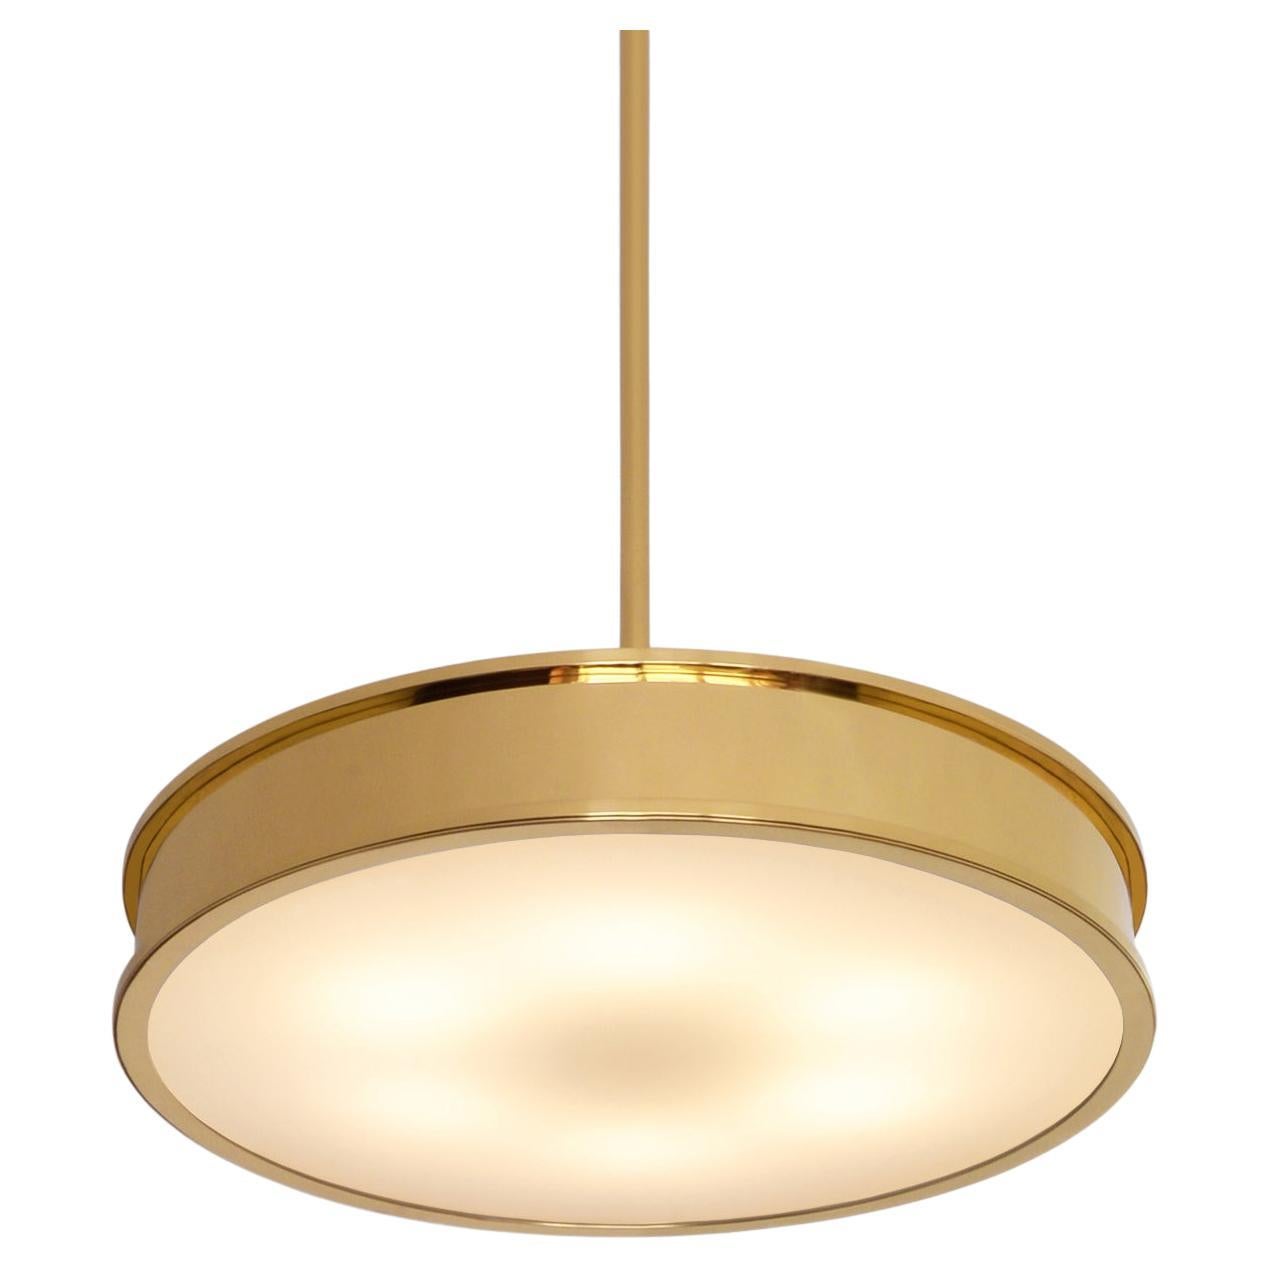 Bespoke Modernist Circular Pendant Light in Polished Brass and Opal Glass, 2018